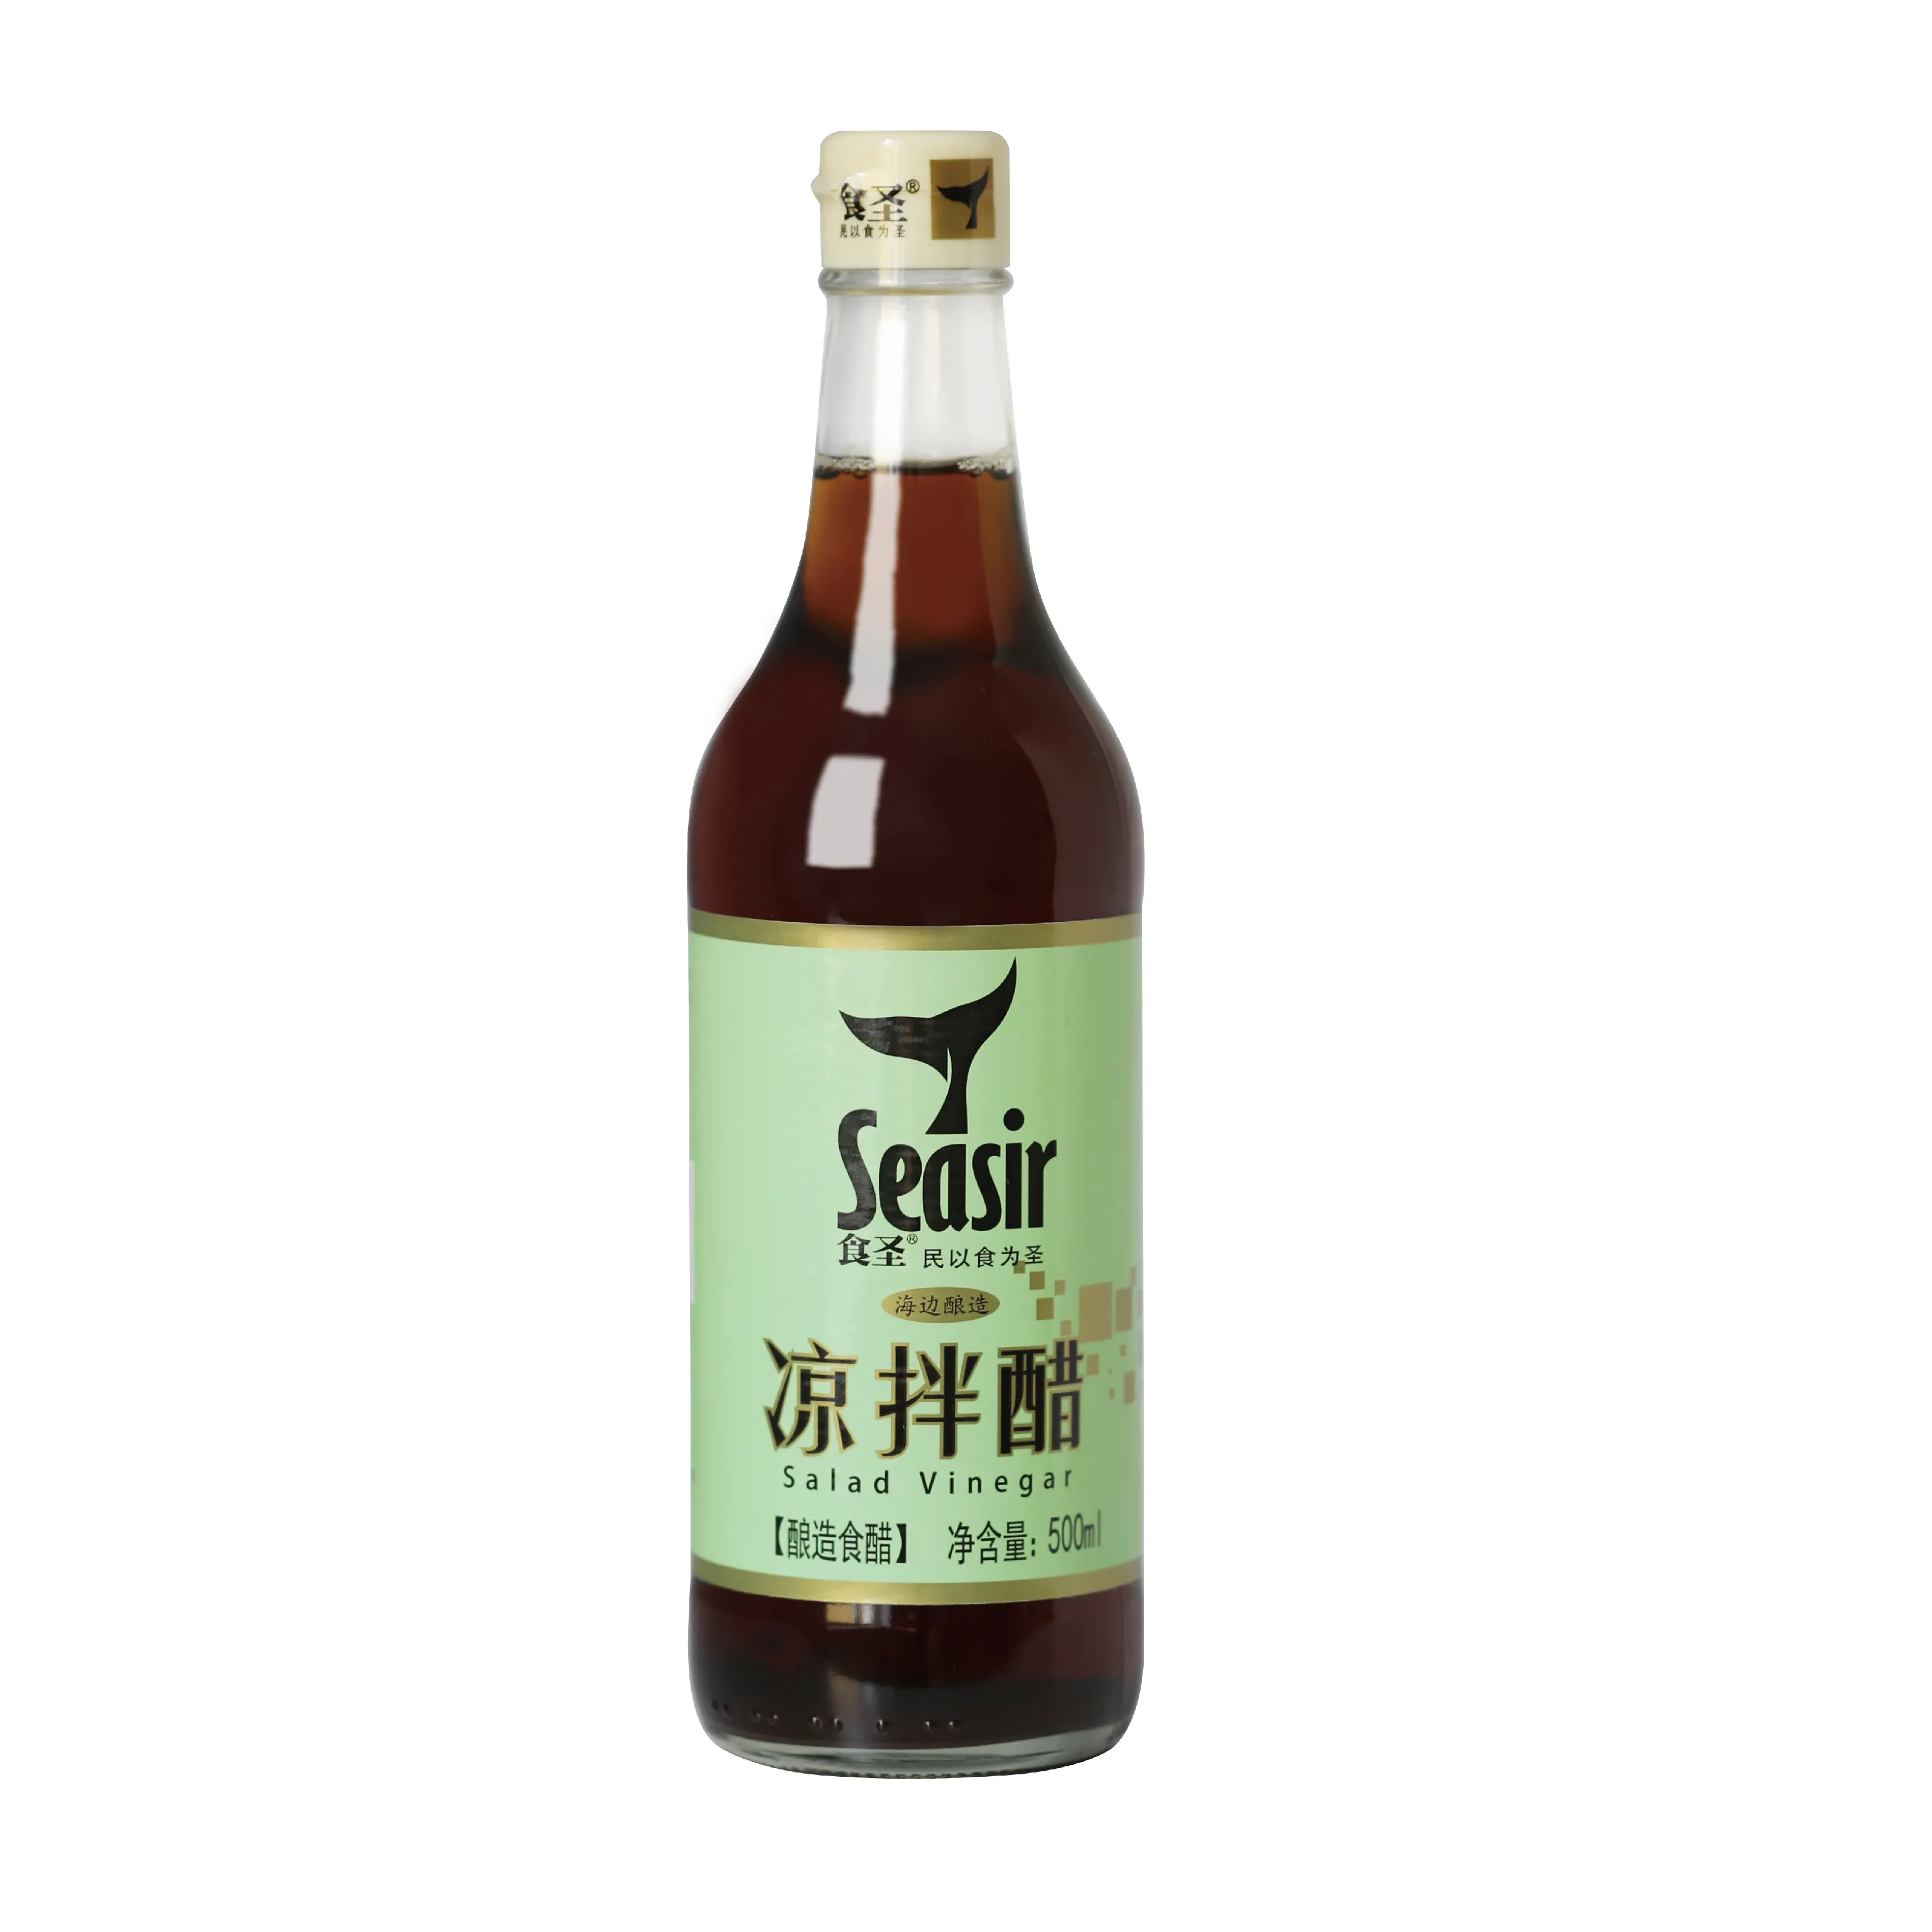 4 Degree Shushi Rice Vinegar Of Seasir Brand 500ml 800ml 1L